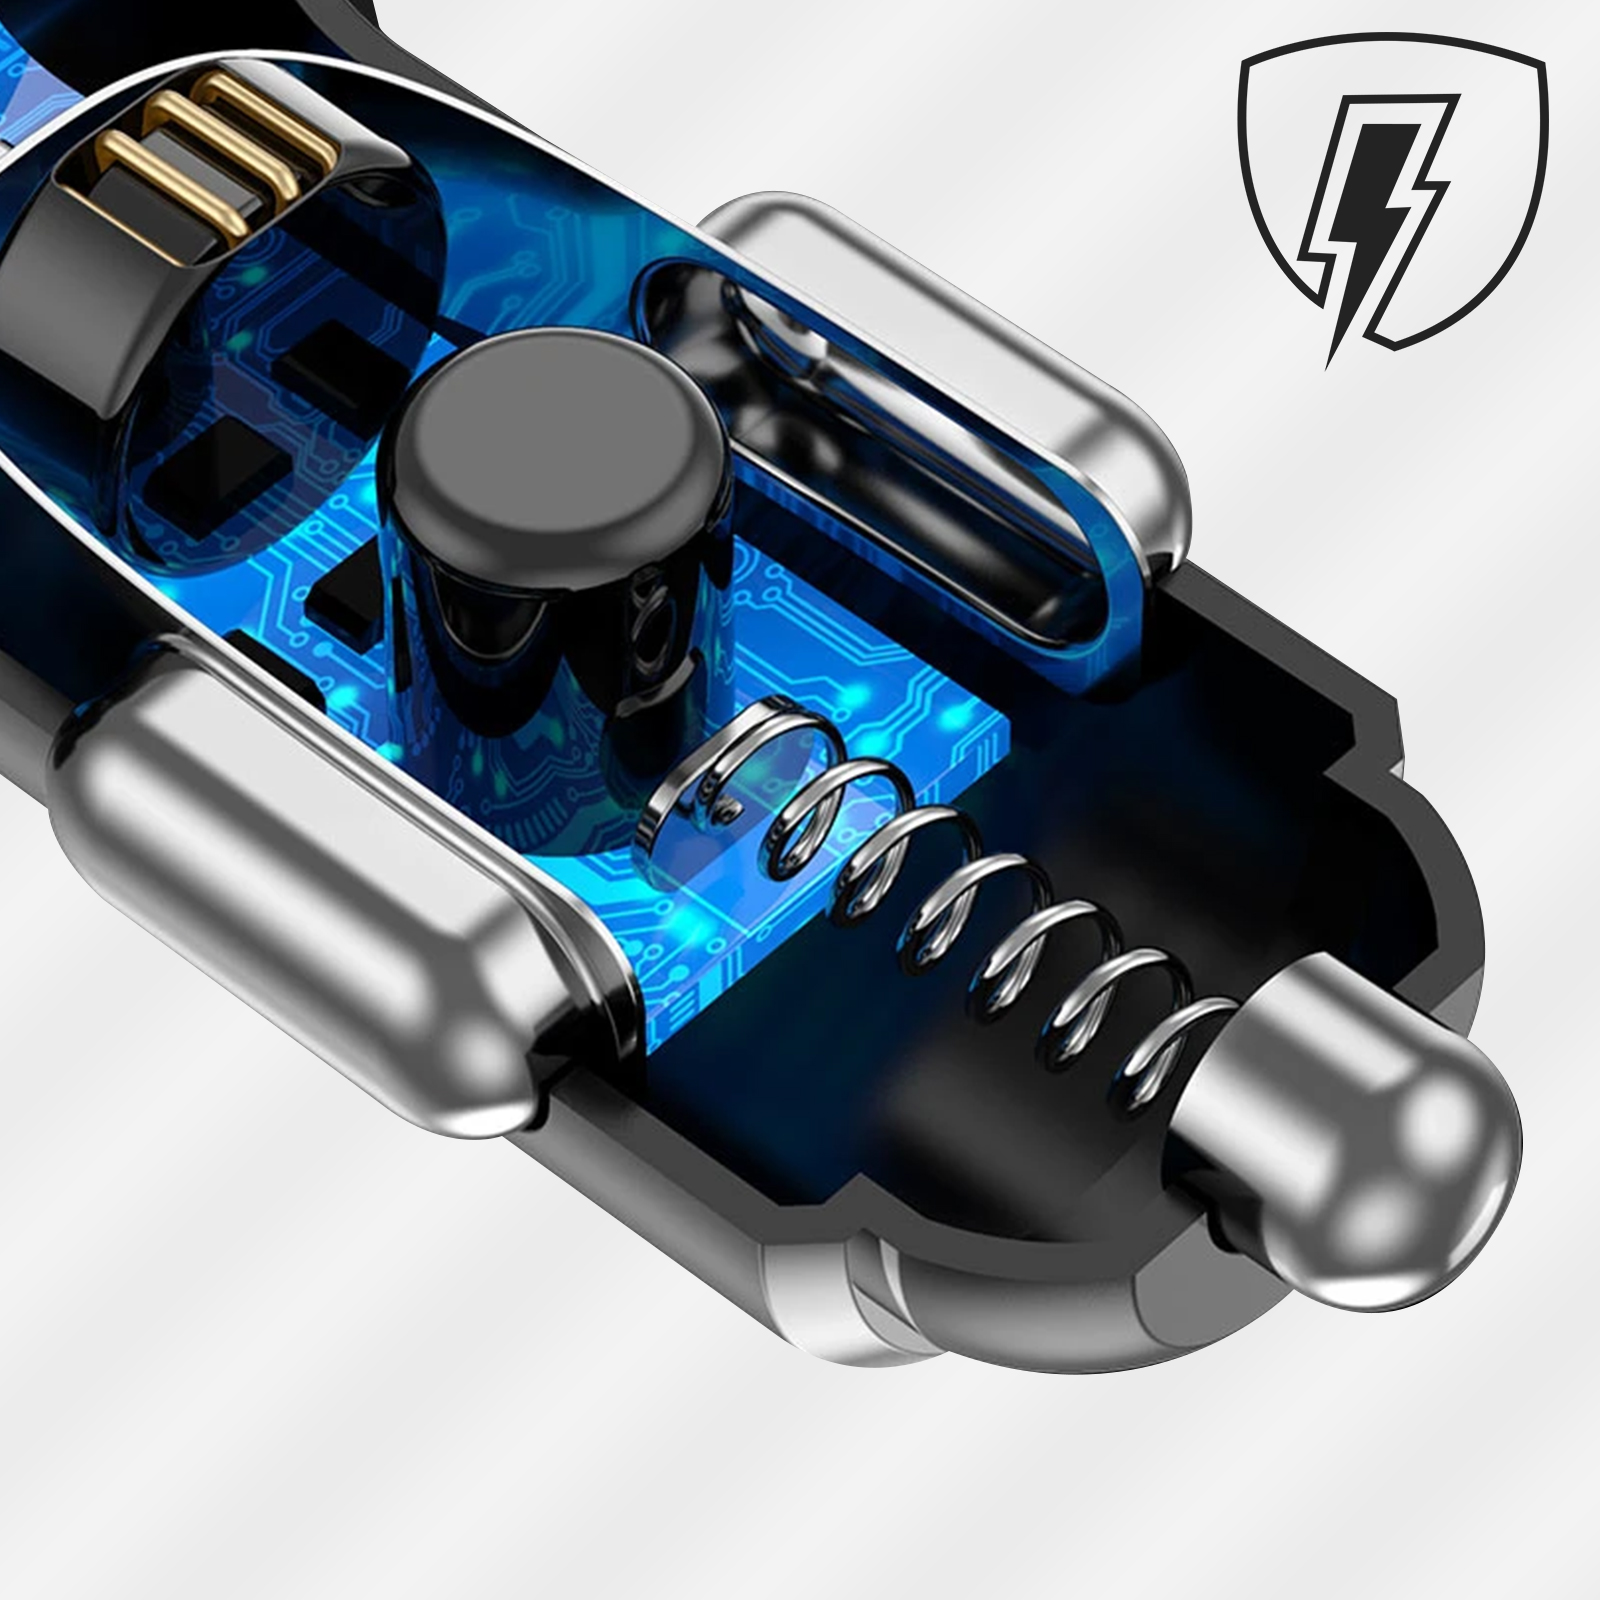 Kit chargeur téléphone Lightning pour voiture - Akashi - code art 339674  AKASHI - Chargeur allume cigare